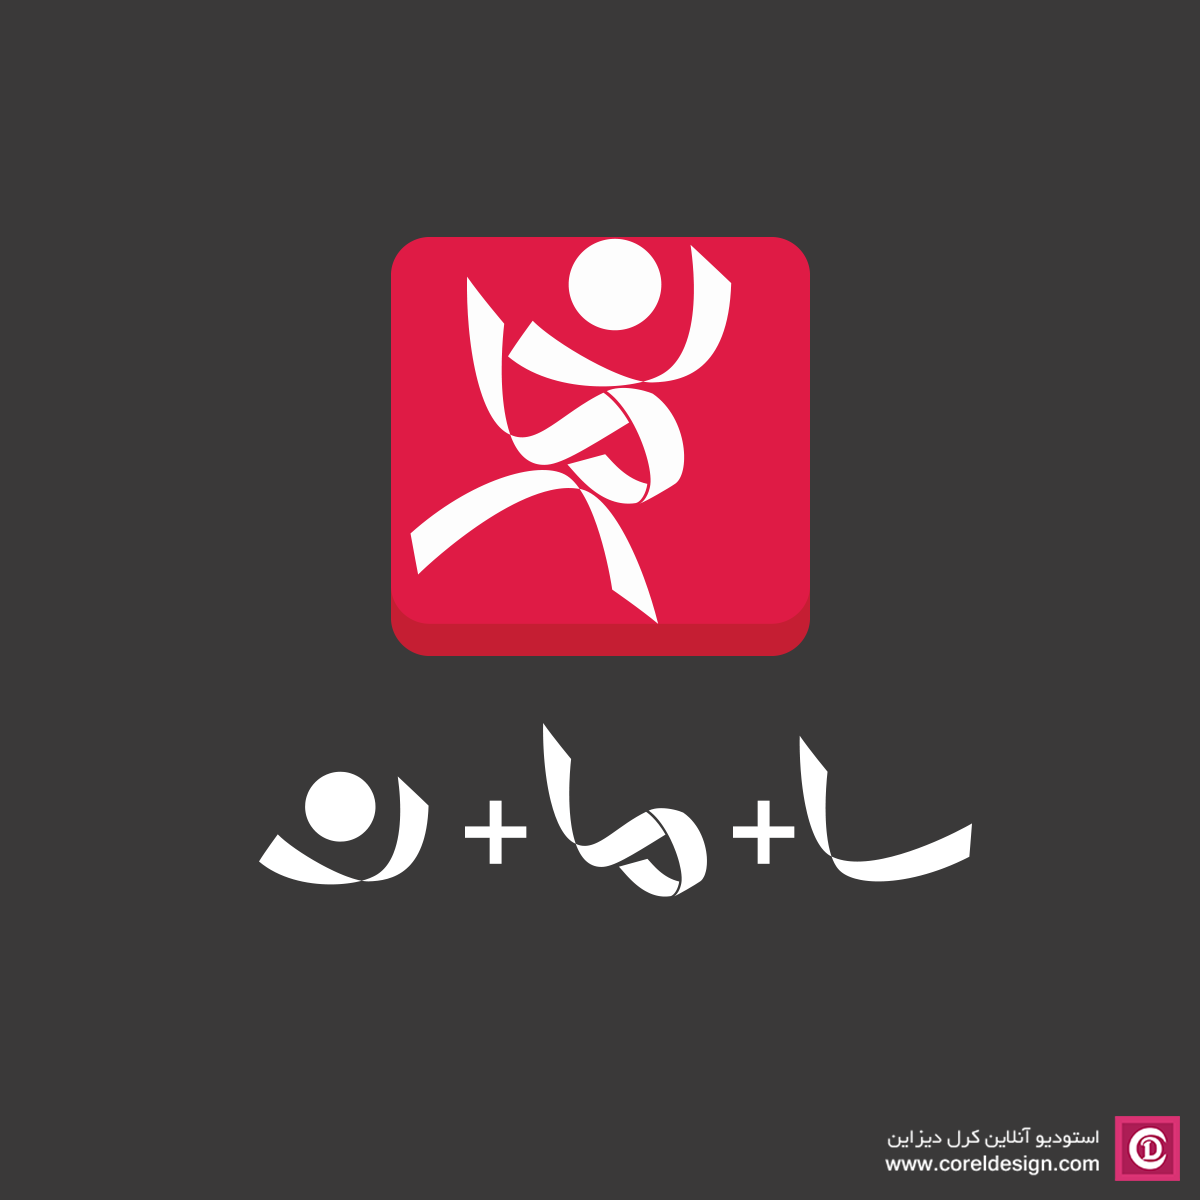 Saman_logo_By_CorelDesign_3